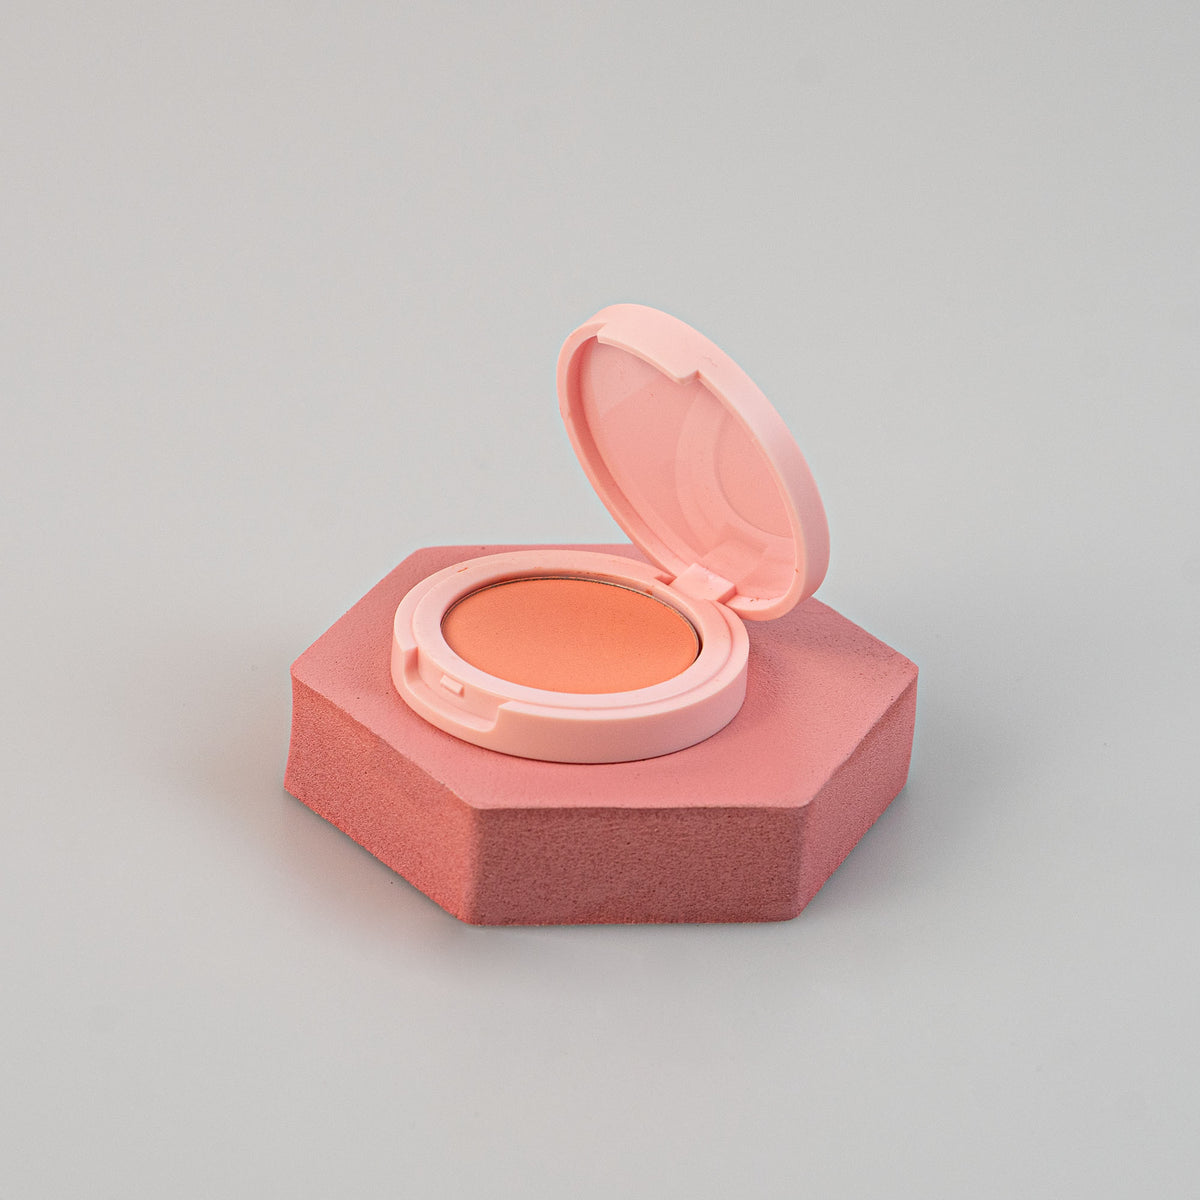 Blush make up Miniso Beauty Pink Peach Fuchsia Pink Cube Collection